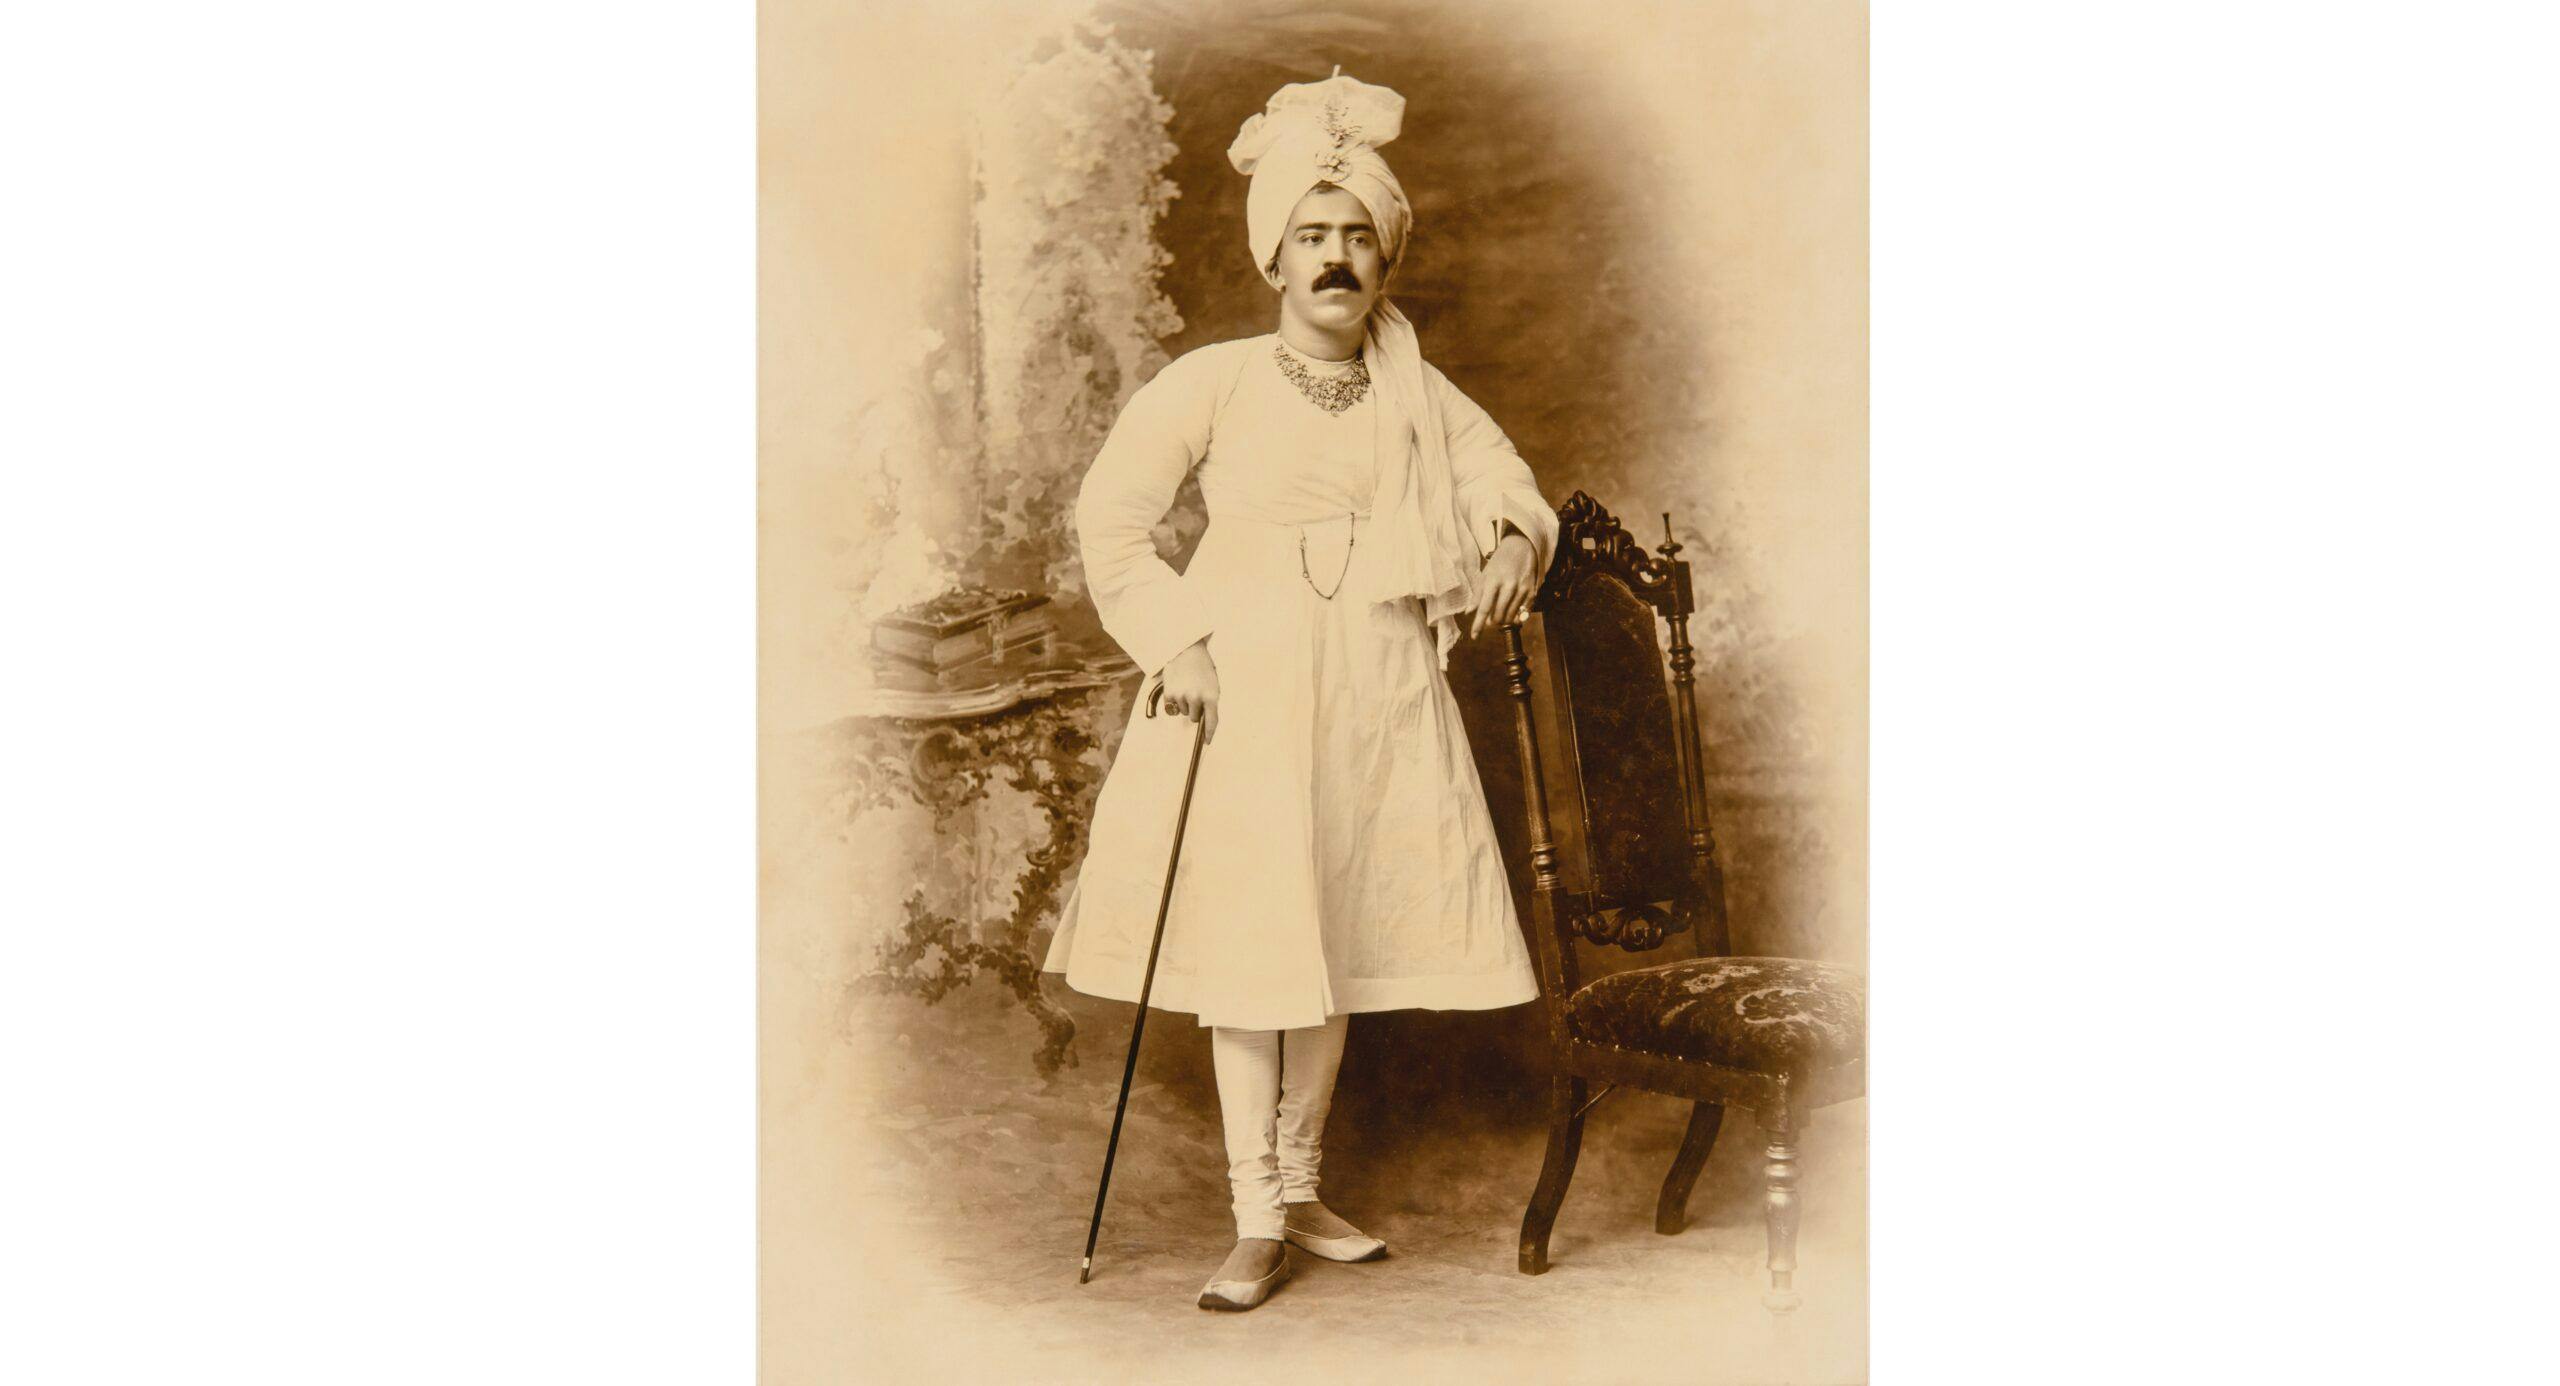 Mir Osman Ali Khan on his coronation day